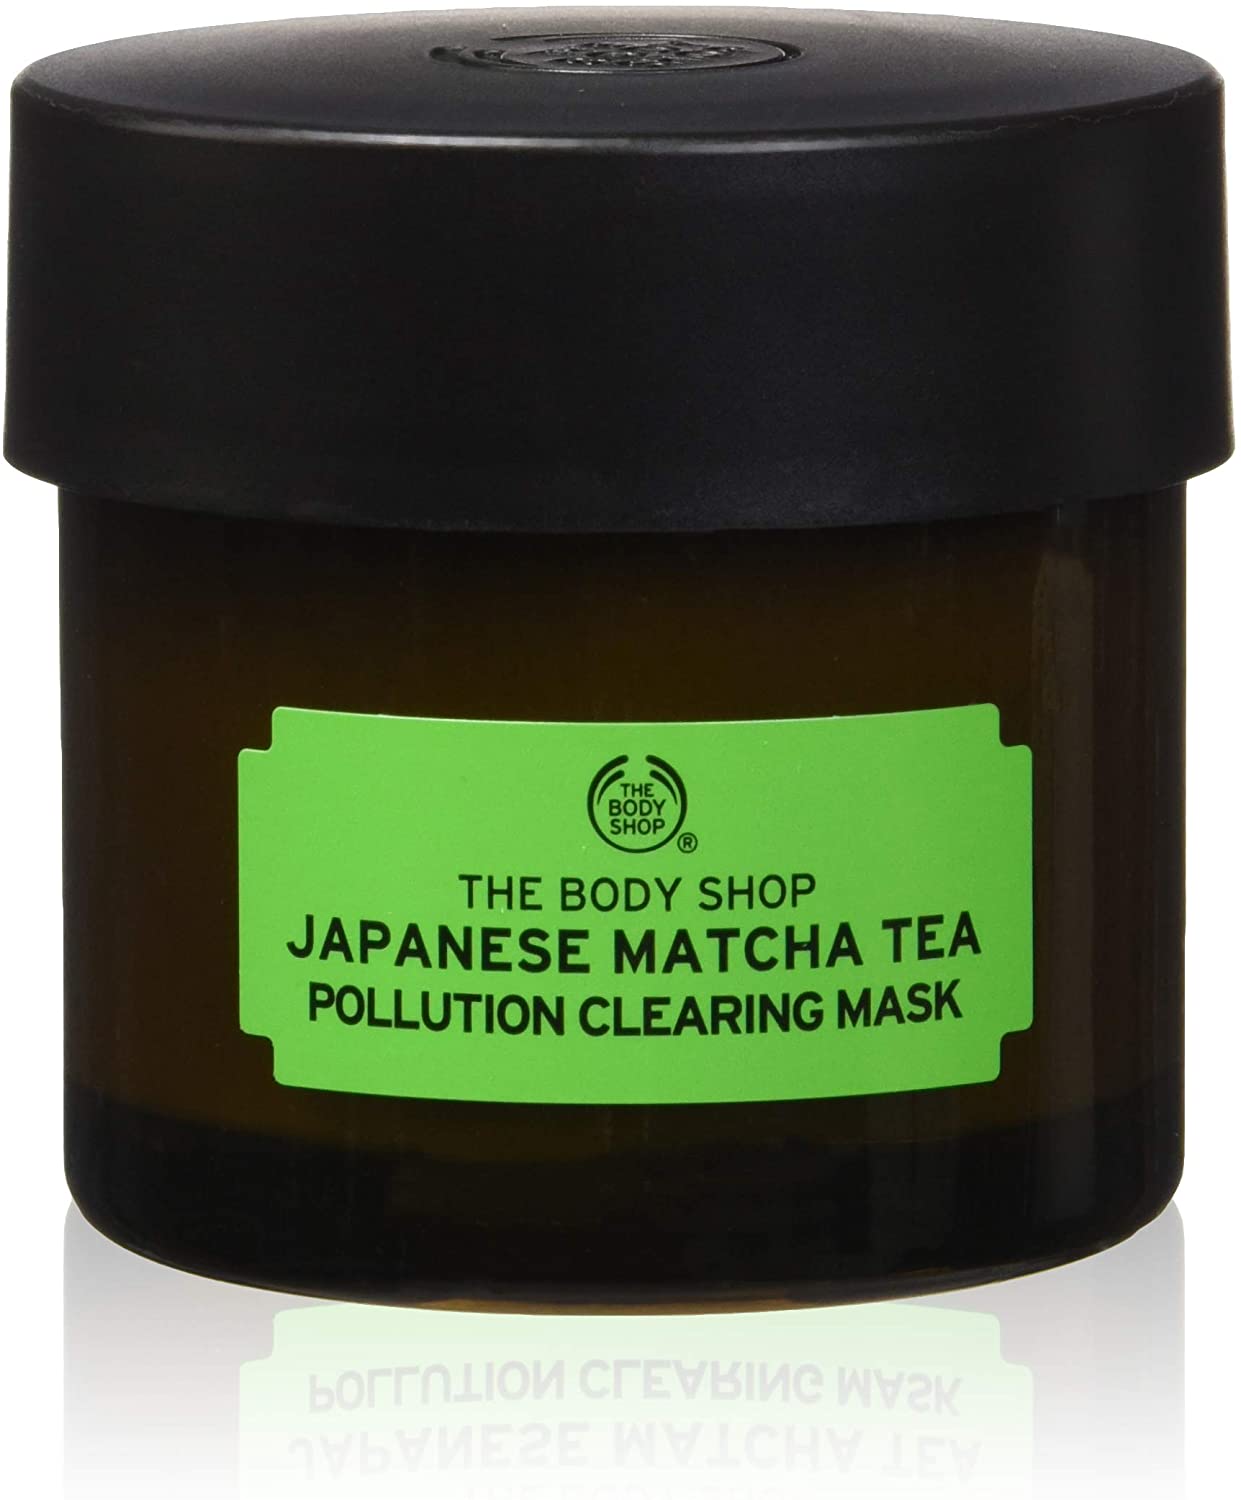 Japanese Matcha Tea Pollution Clearing Mask ماسك وجه بالشاي الماتشتا الياباني ضد التلوث